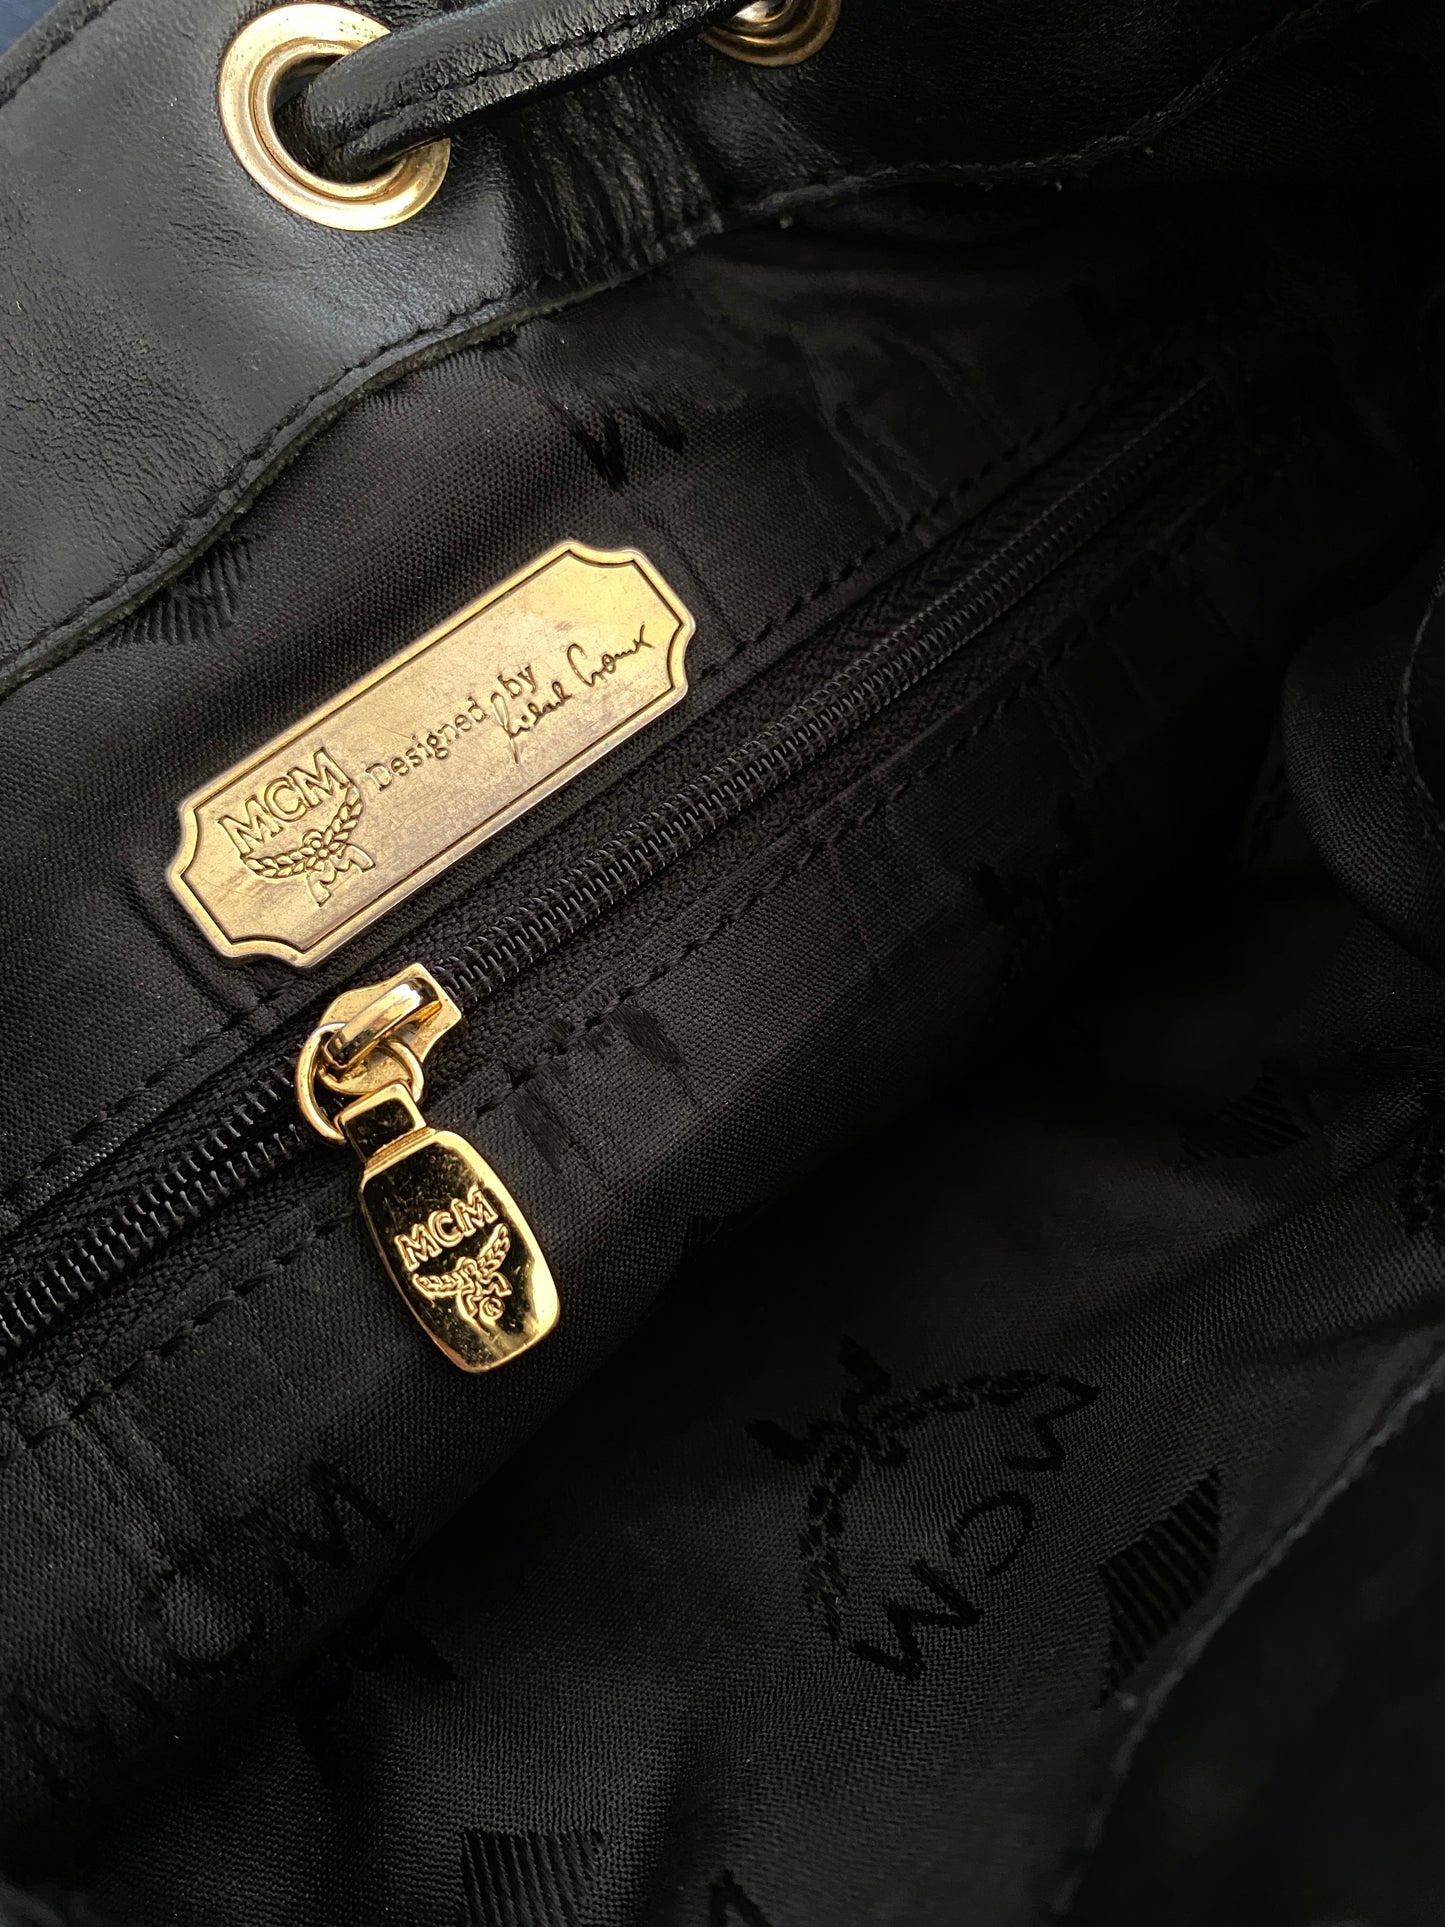 MCM leather bag pouch black